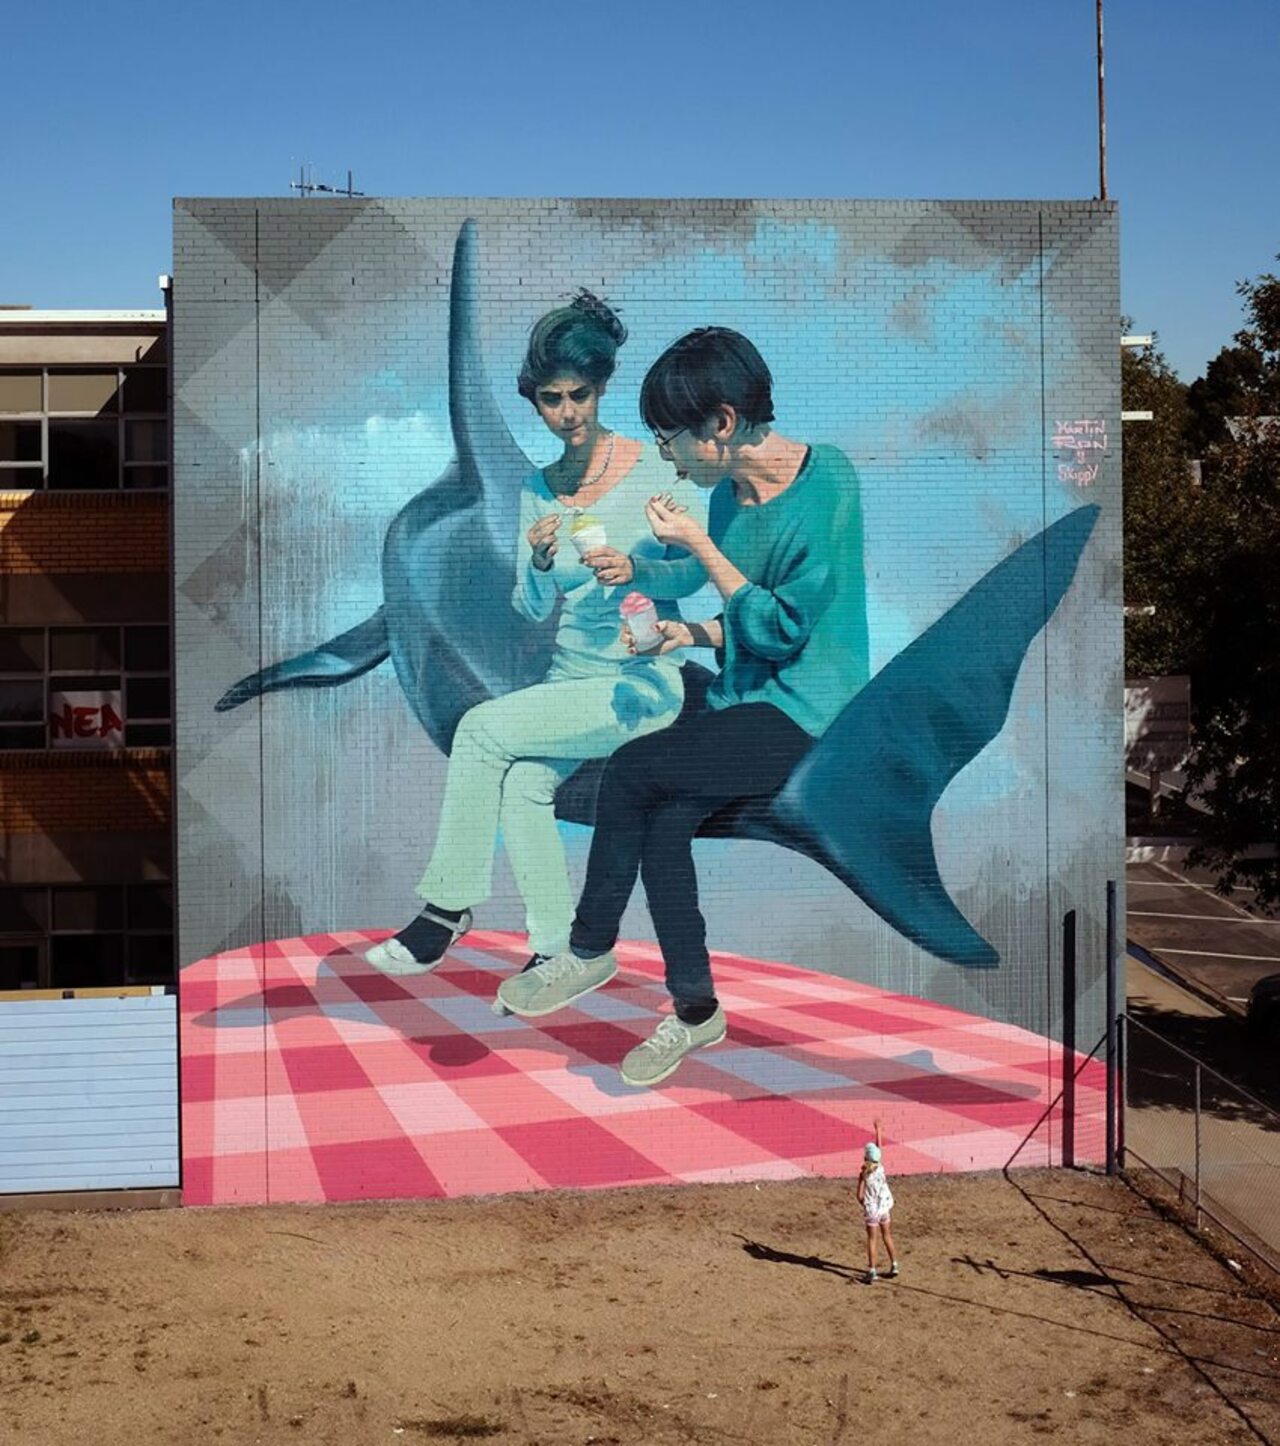 Mural by Martin Ron for Wall to Wall festival in Benalla, Australia #streetart #graffiti #arteurbano #граффити #artederue #martinron #walltowall #festival #benalla #australia   via Urbanite | https://goo.gl/hdgfLM https://t.co/Ccle6J3jij